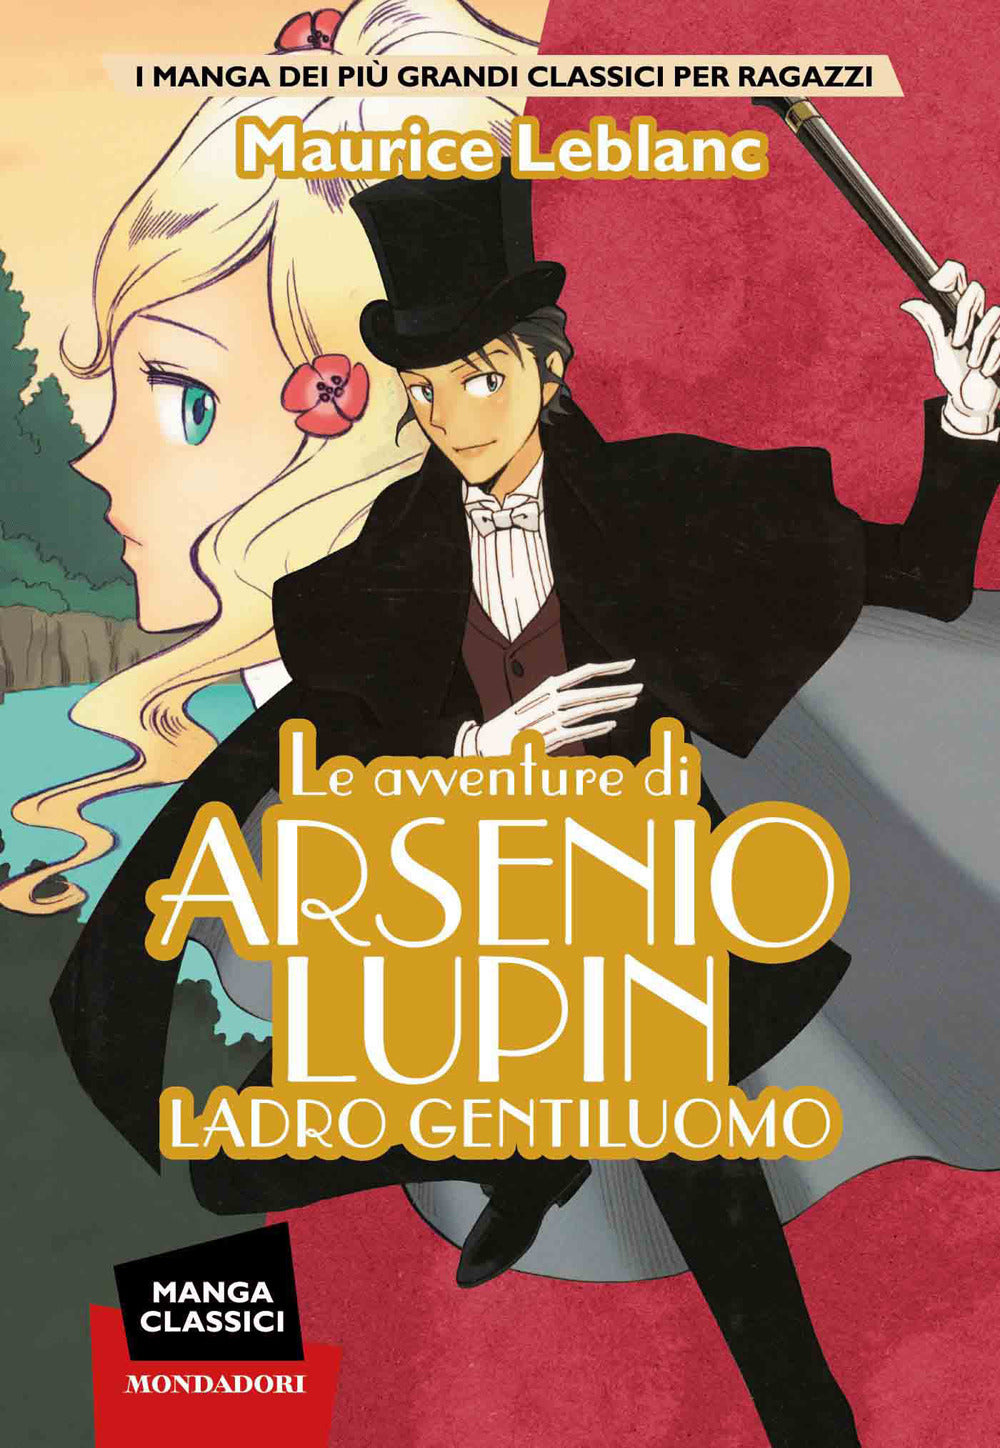 Le avventure di Arsenio Lupin. Ladro gentiluomo. Manga classici.